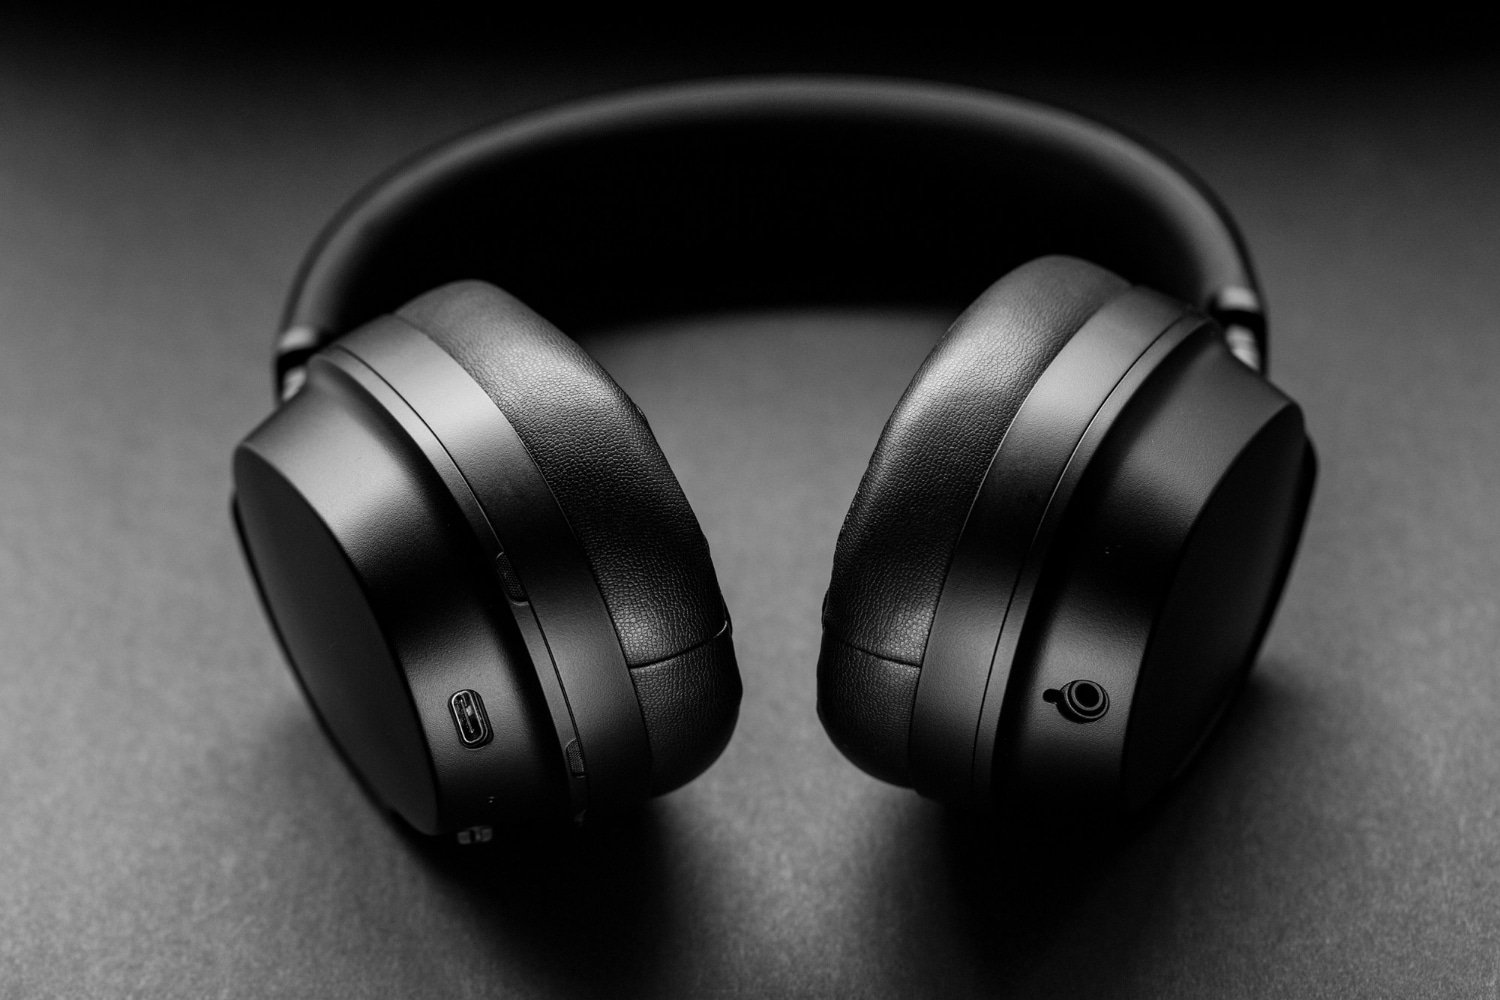 High-Quality Audio Gear by Marshall Headphones